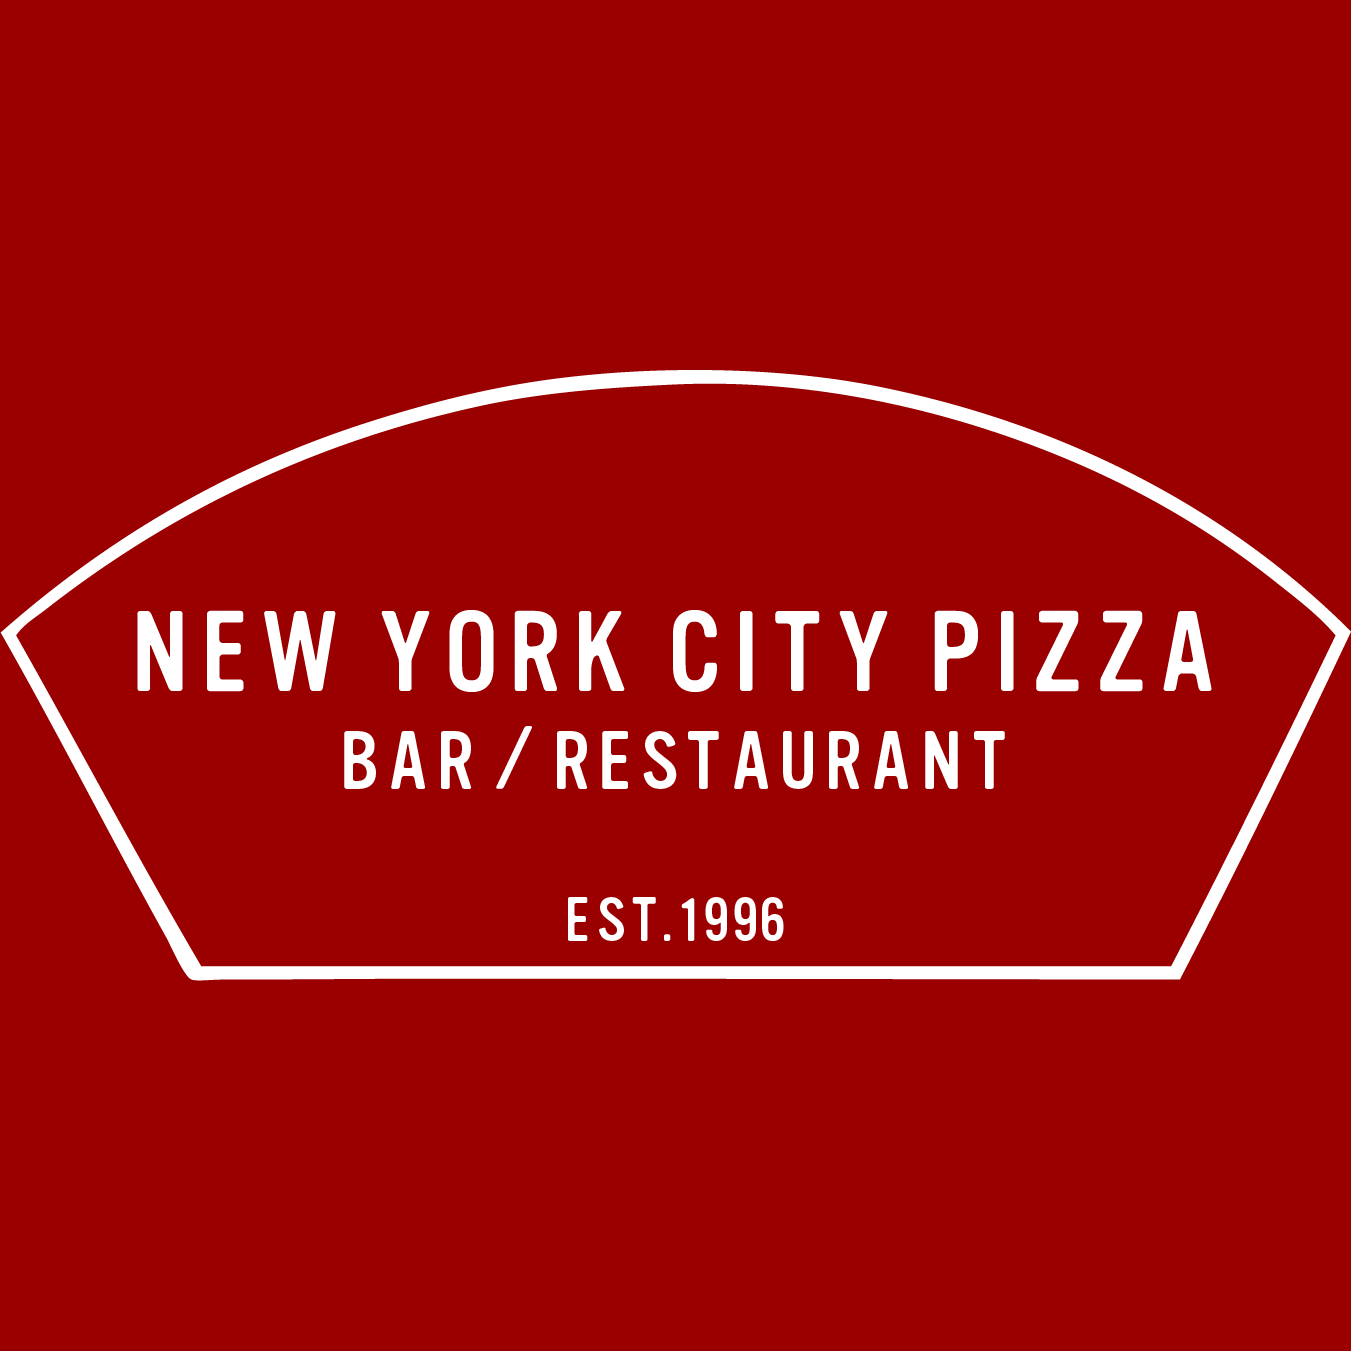 New York City Pizza logo